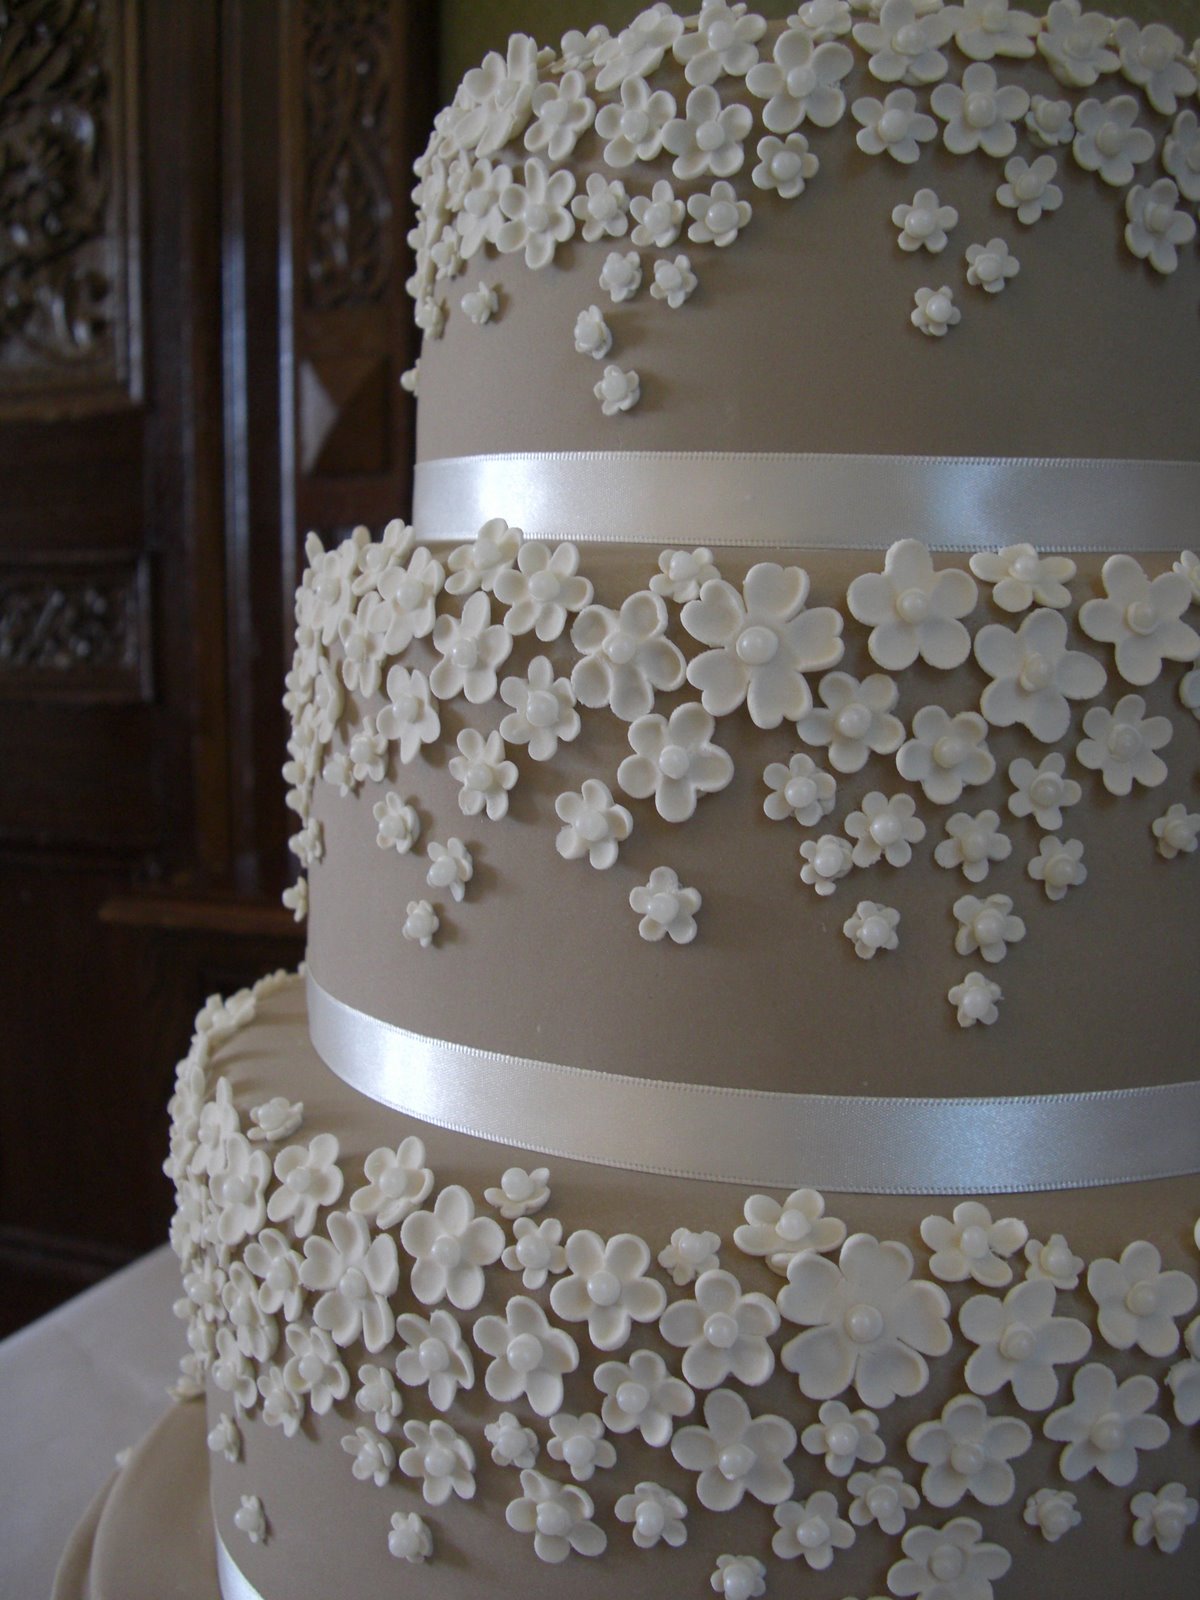 [Sarah+&+Anthony's+Wedding+Cake+032.jpg]